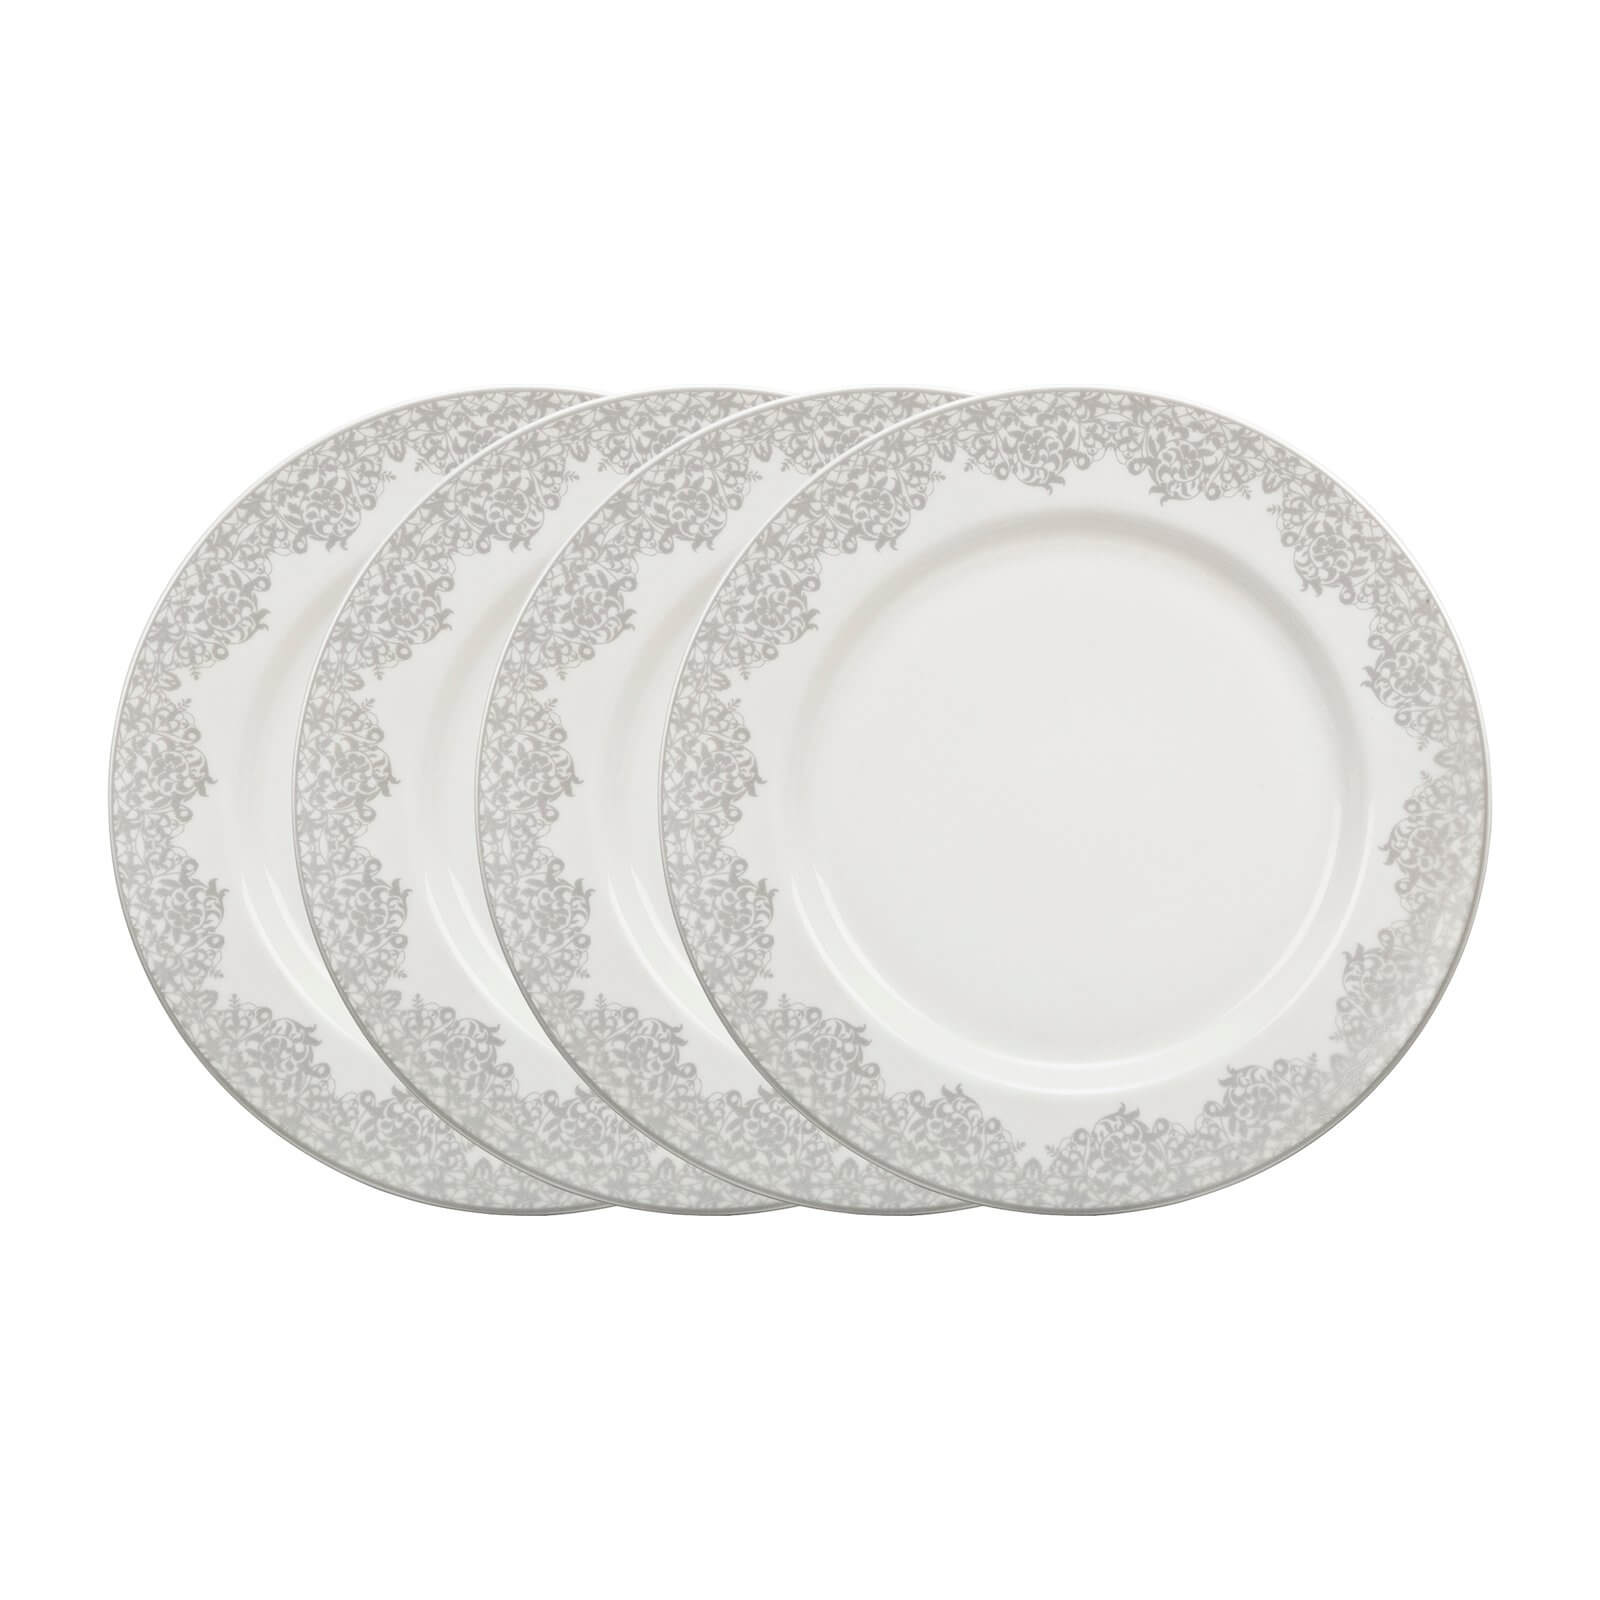 Denby Monsoon Filigree Silver Salad Plates - 4 Piece Set